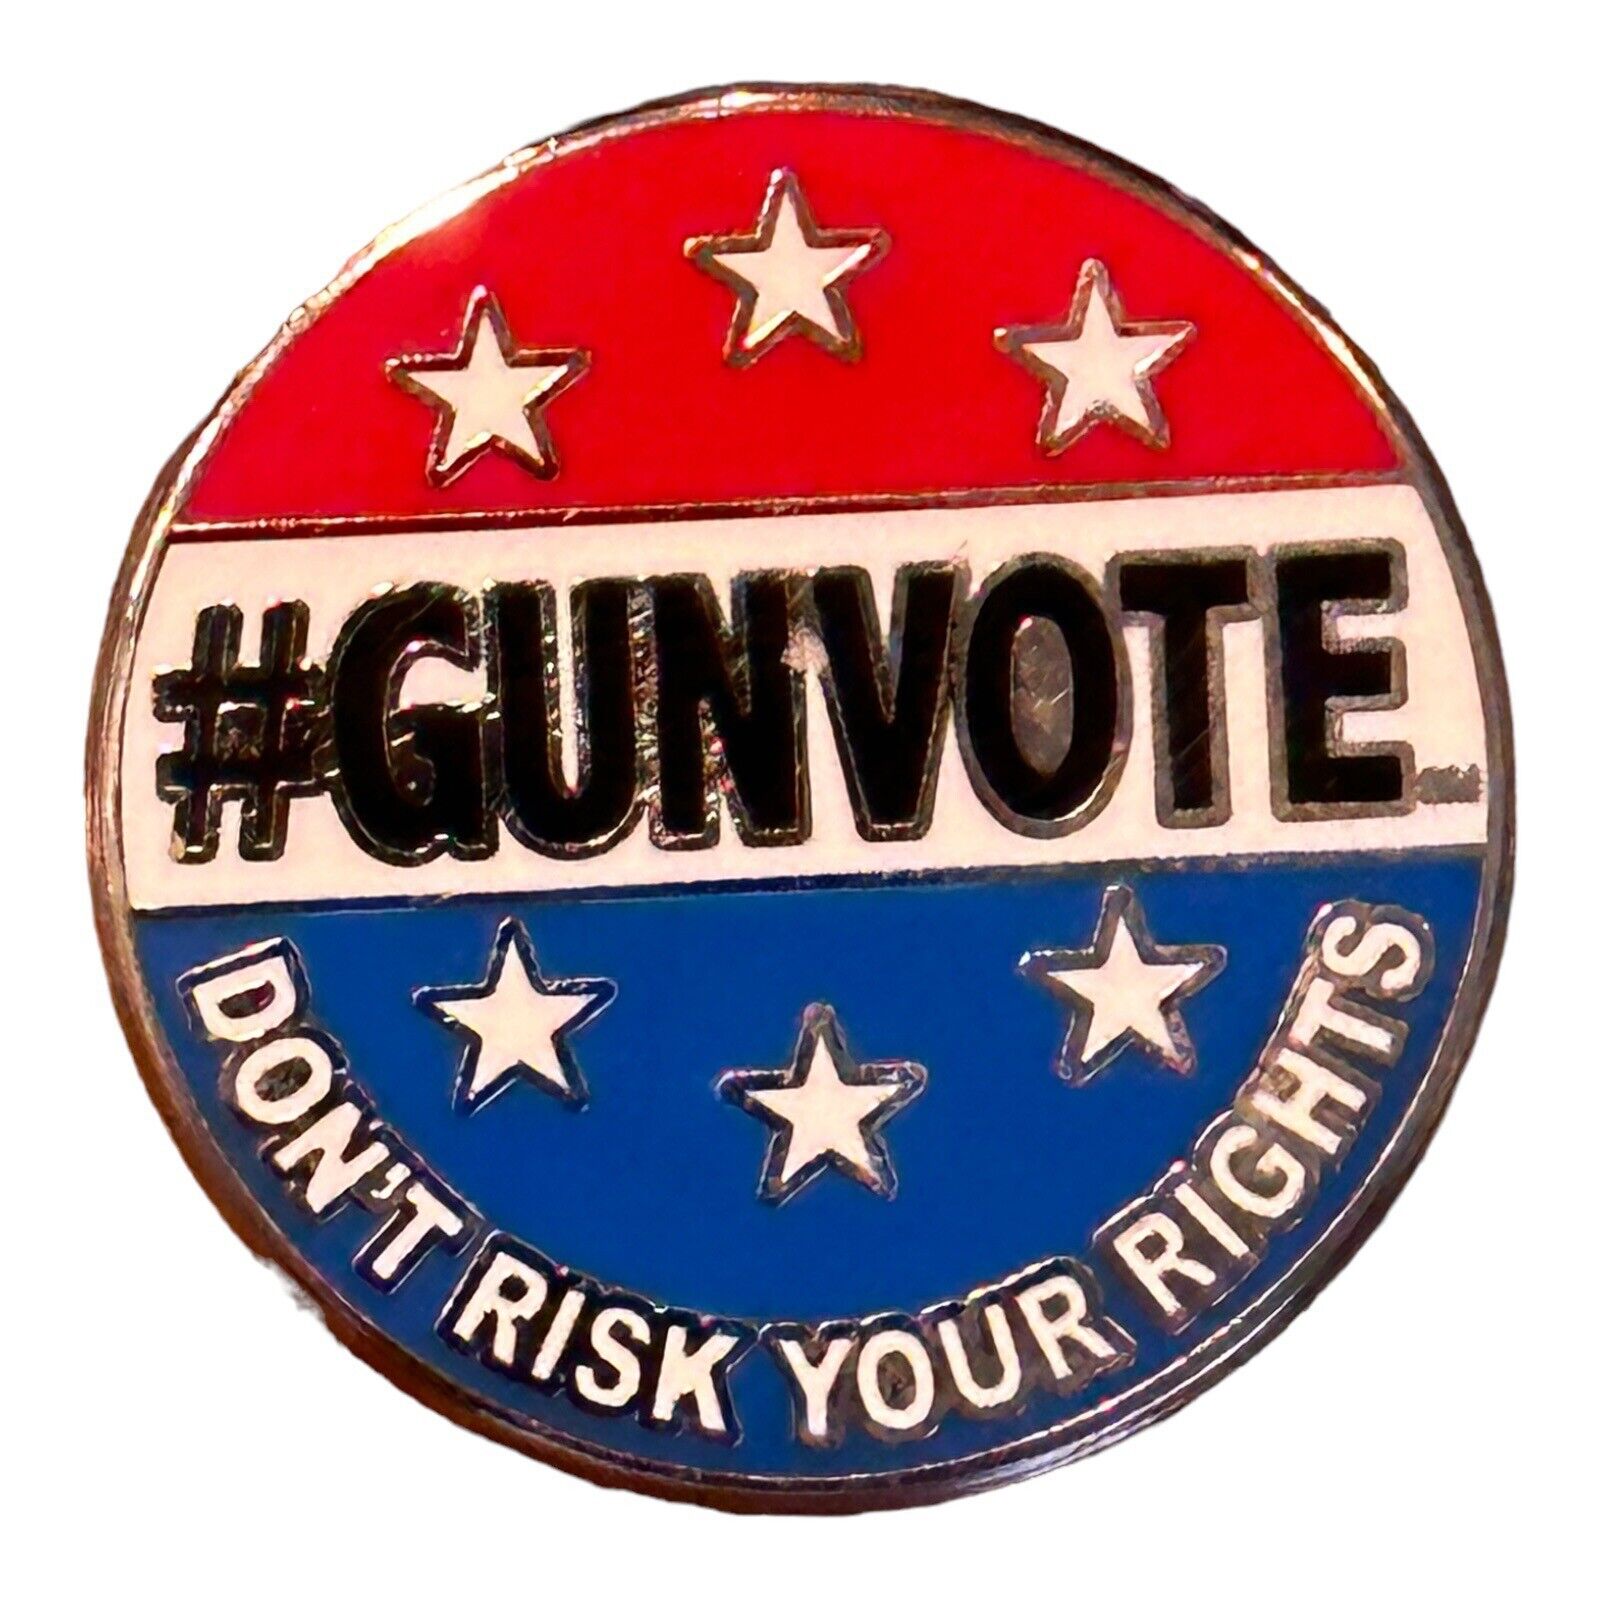 Political Lapel Hat Pin #Gun Vote “Don’t Risk your Rights” 2nd Amendment